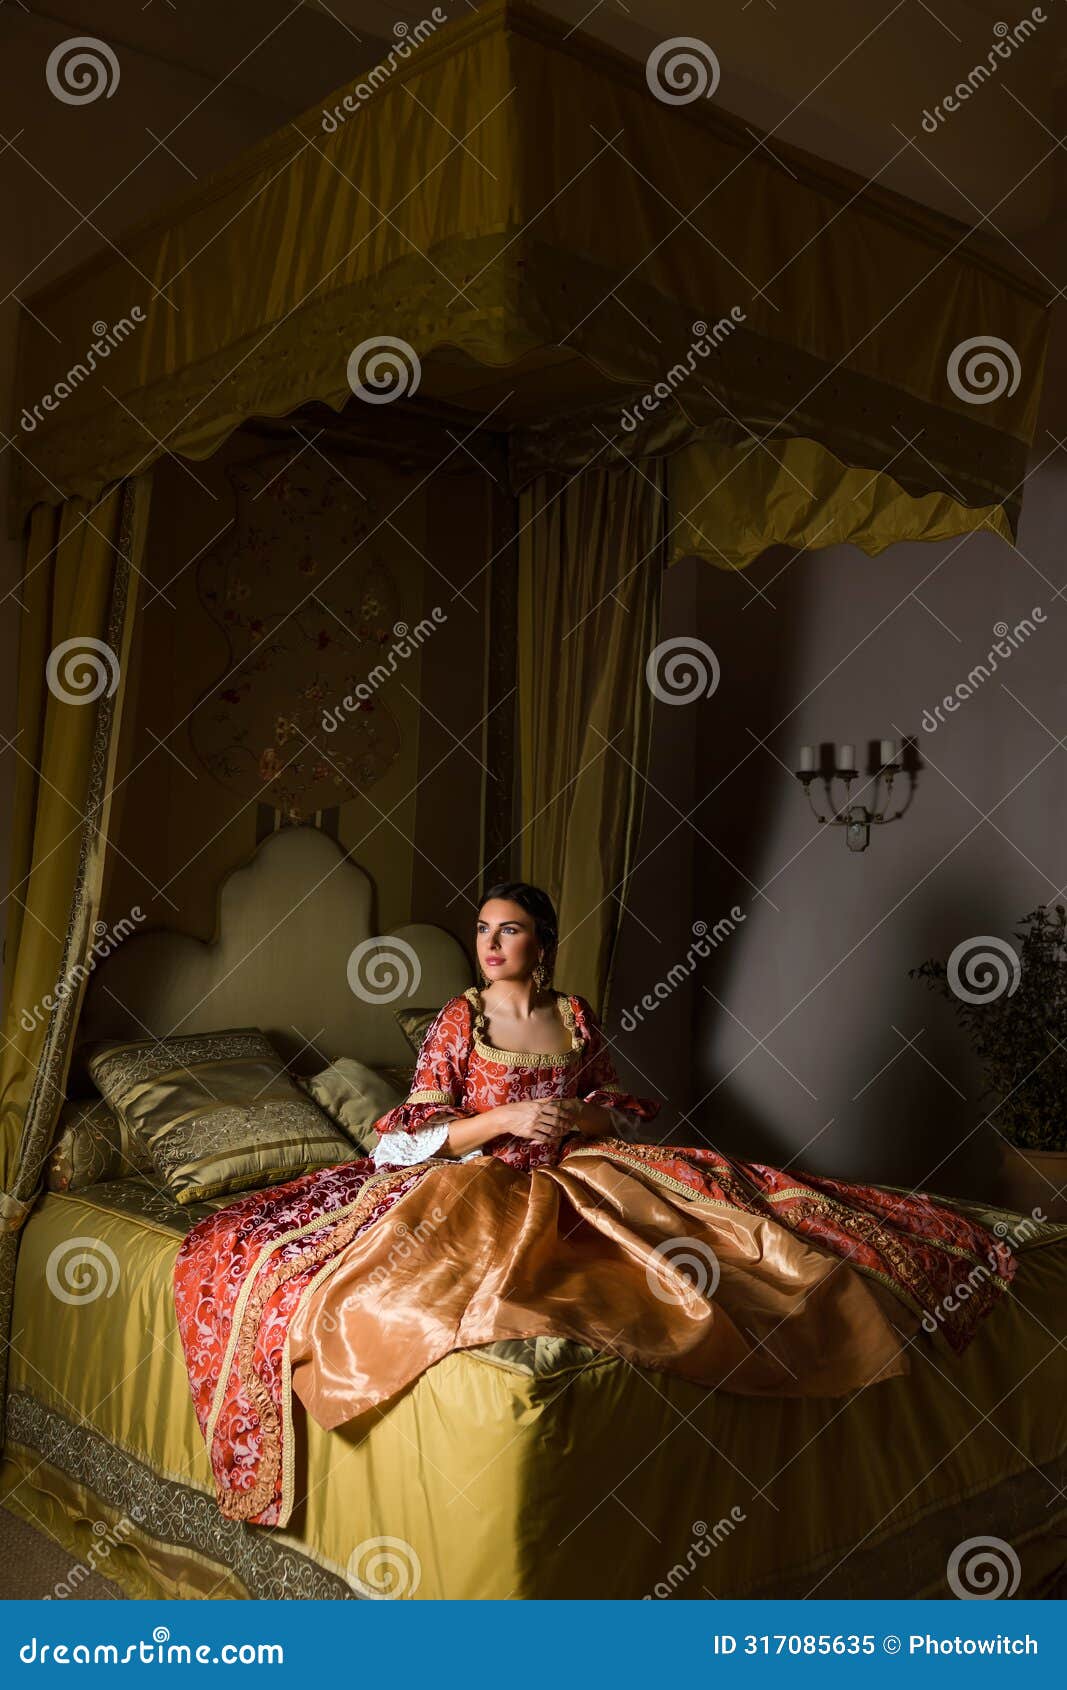 renaissance woman on golden canopy bed